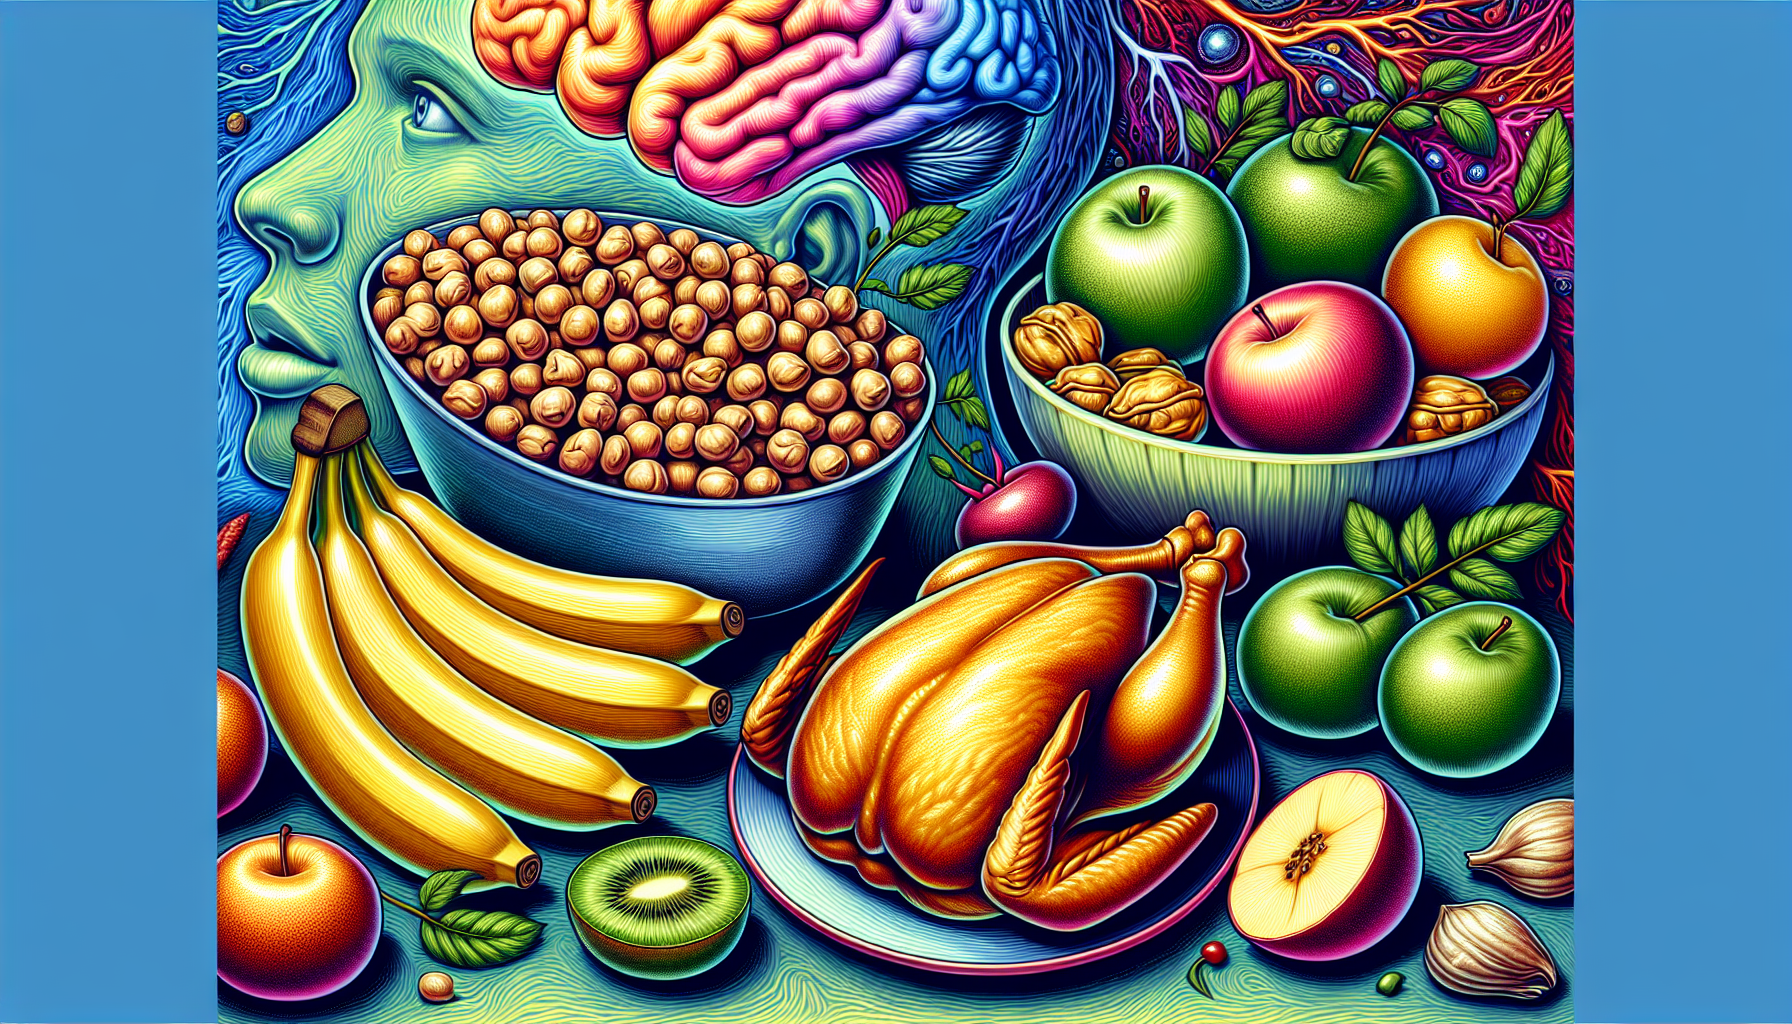 Illustration of a variety of vitamin B6 rich foods